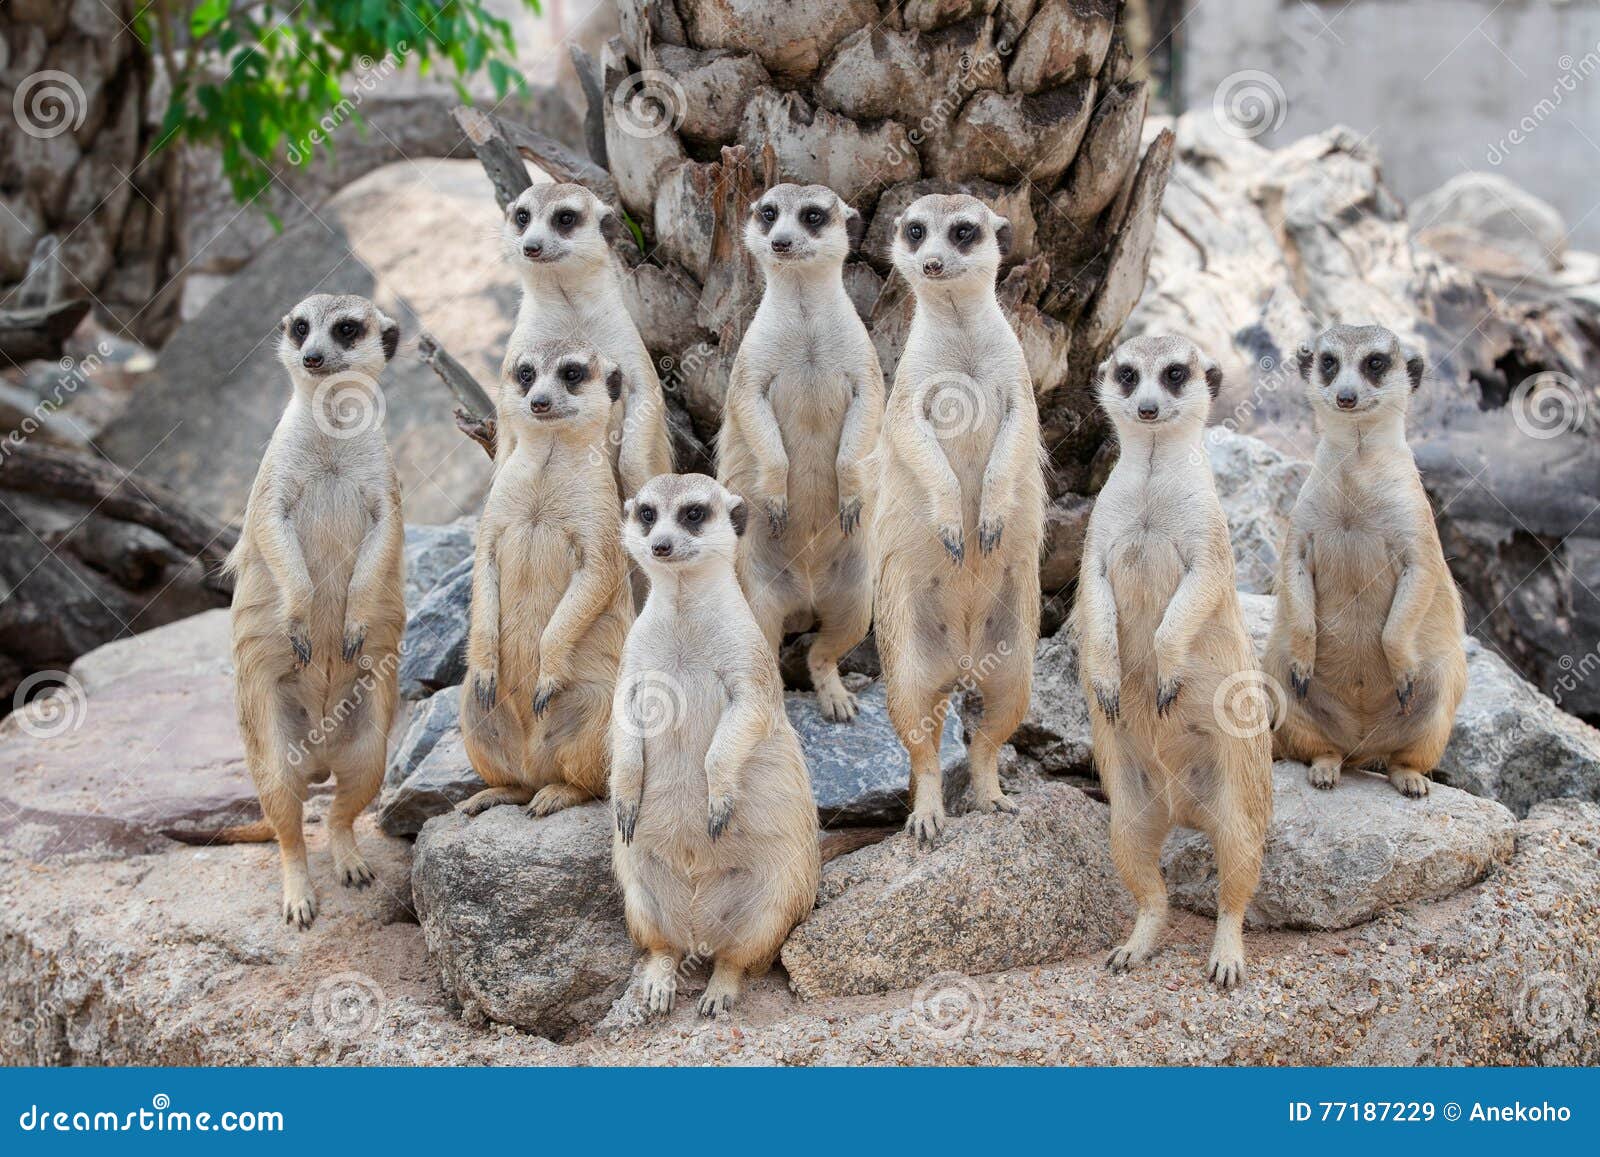 meerkat family are sunbathing